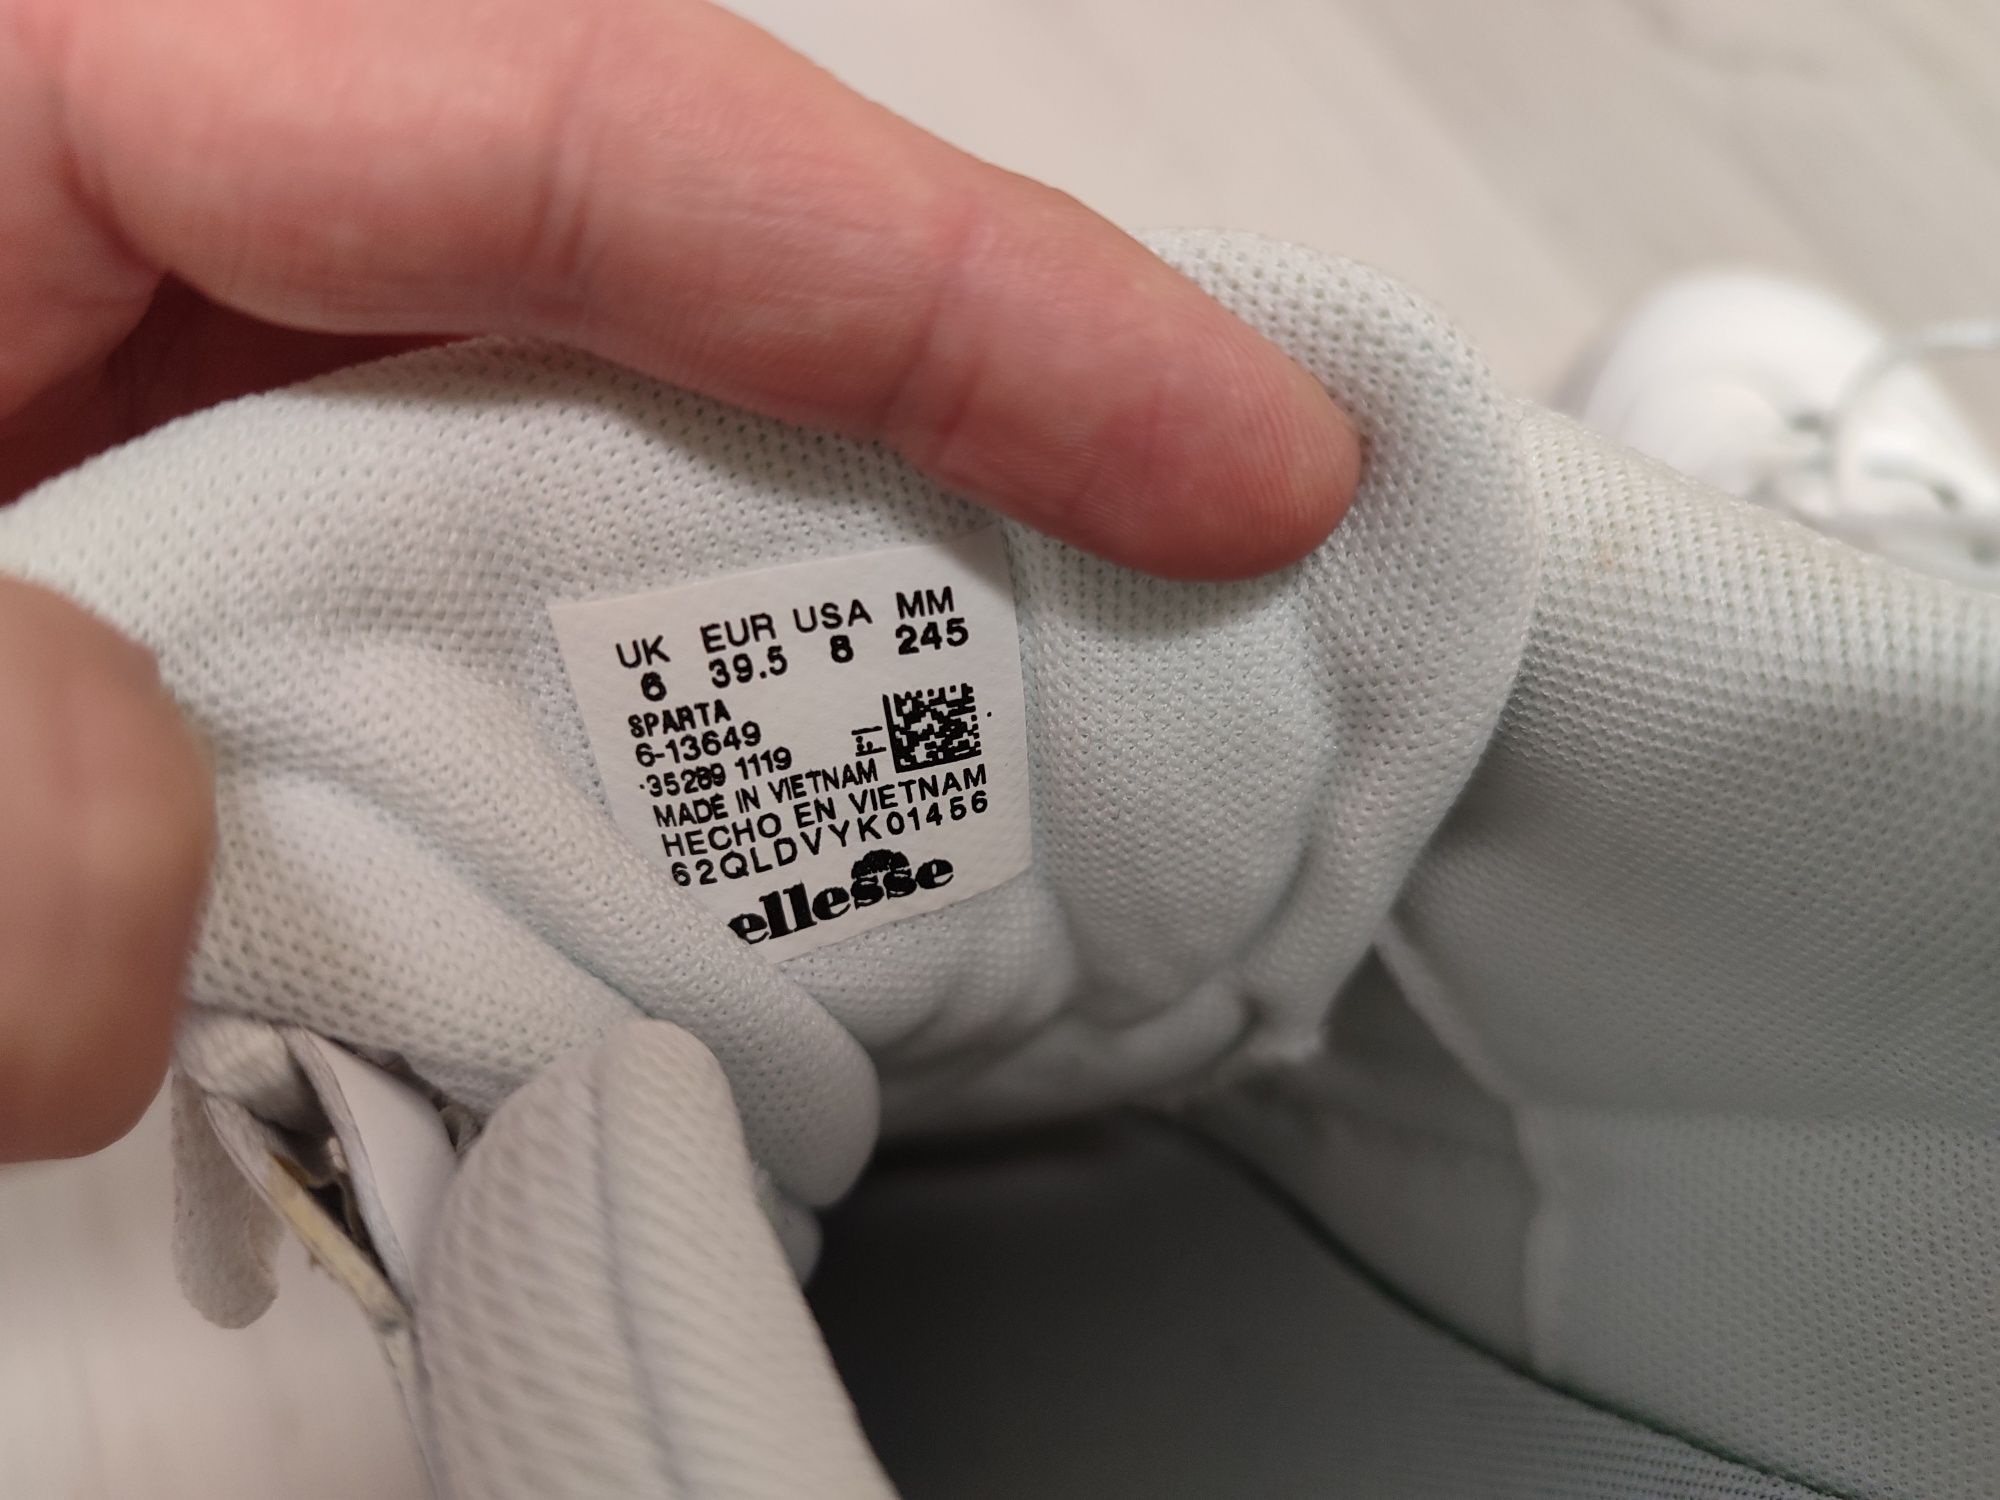 Sneakersy białe 39,5 nowe ellesse sparta buty adidasy sportowe